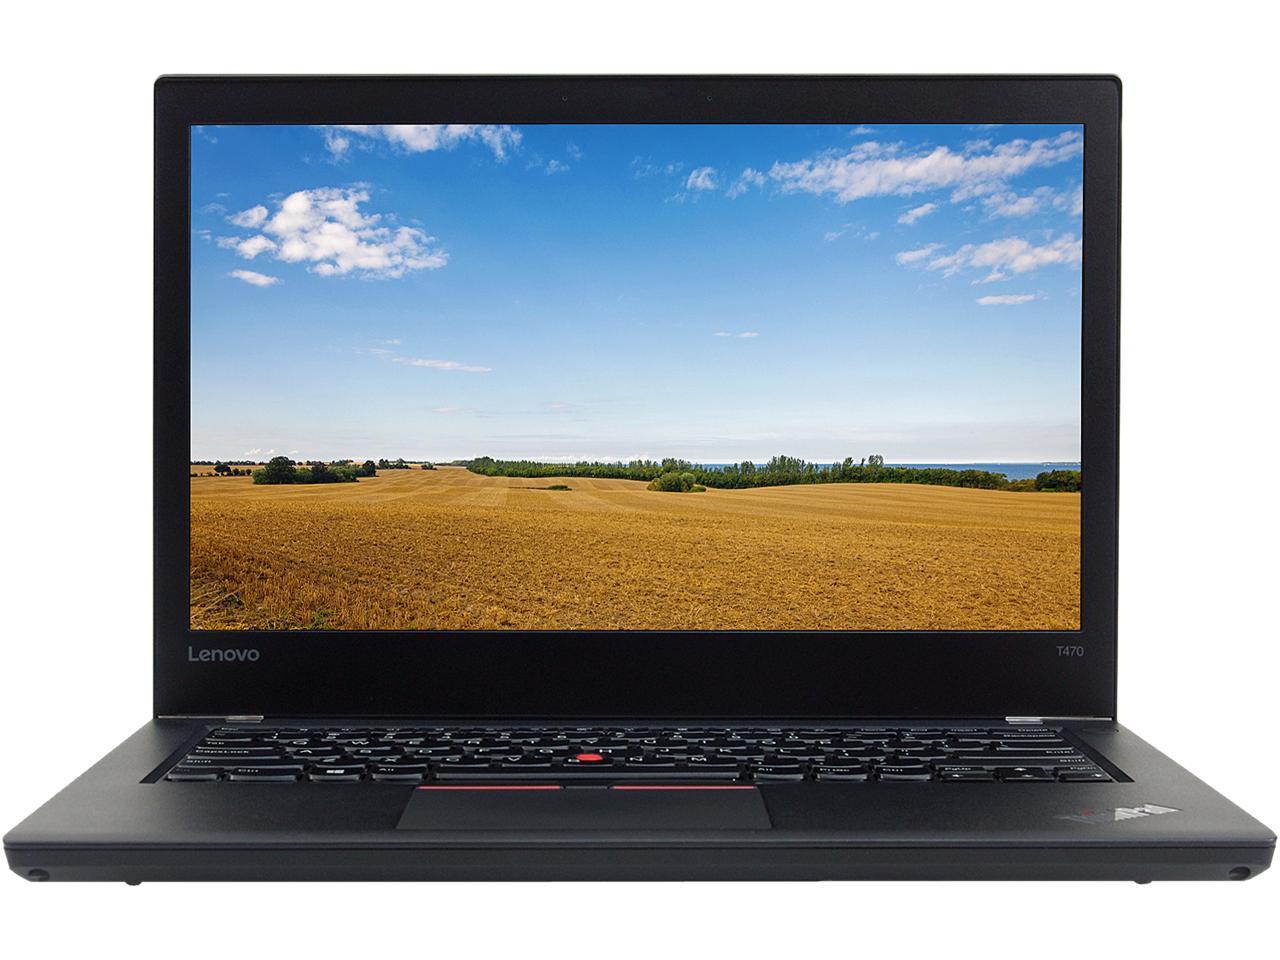 Lenovo T470 Laptop i5-6300U 2.4Ghz 256GB 8GB Win 10 Pro US Key